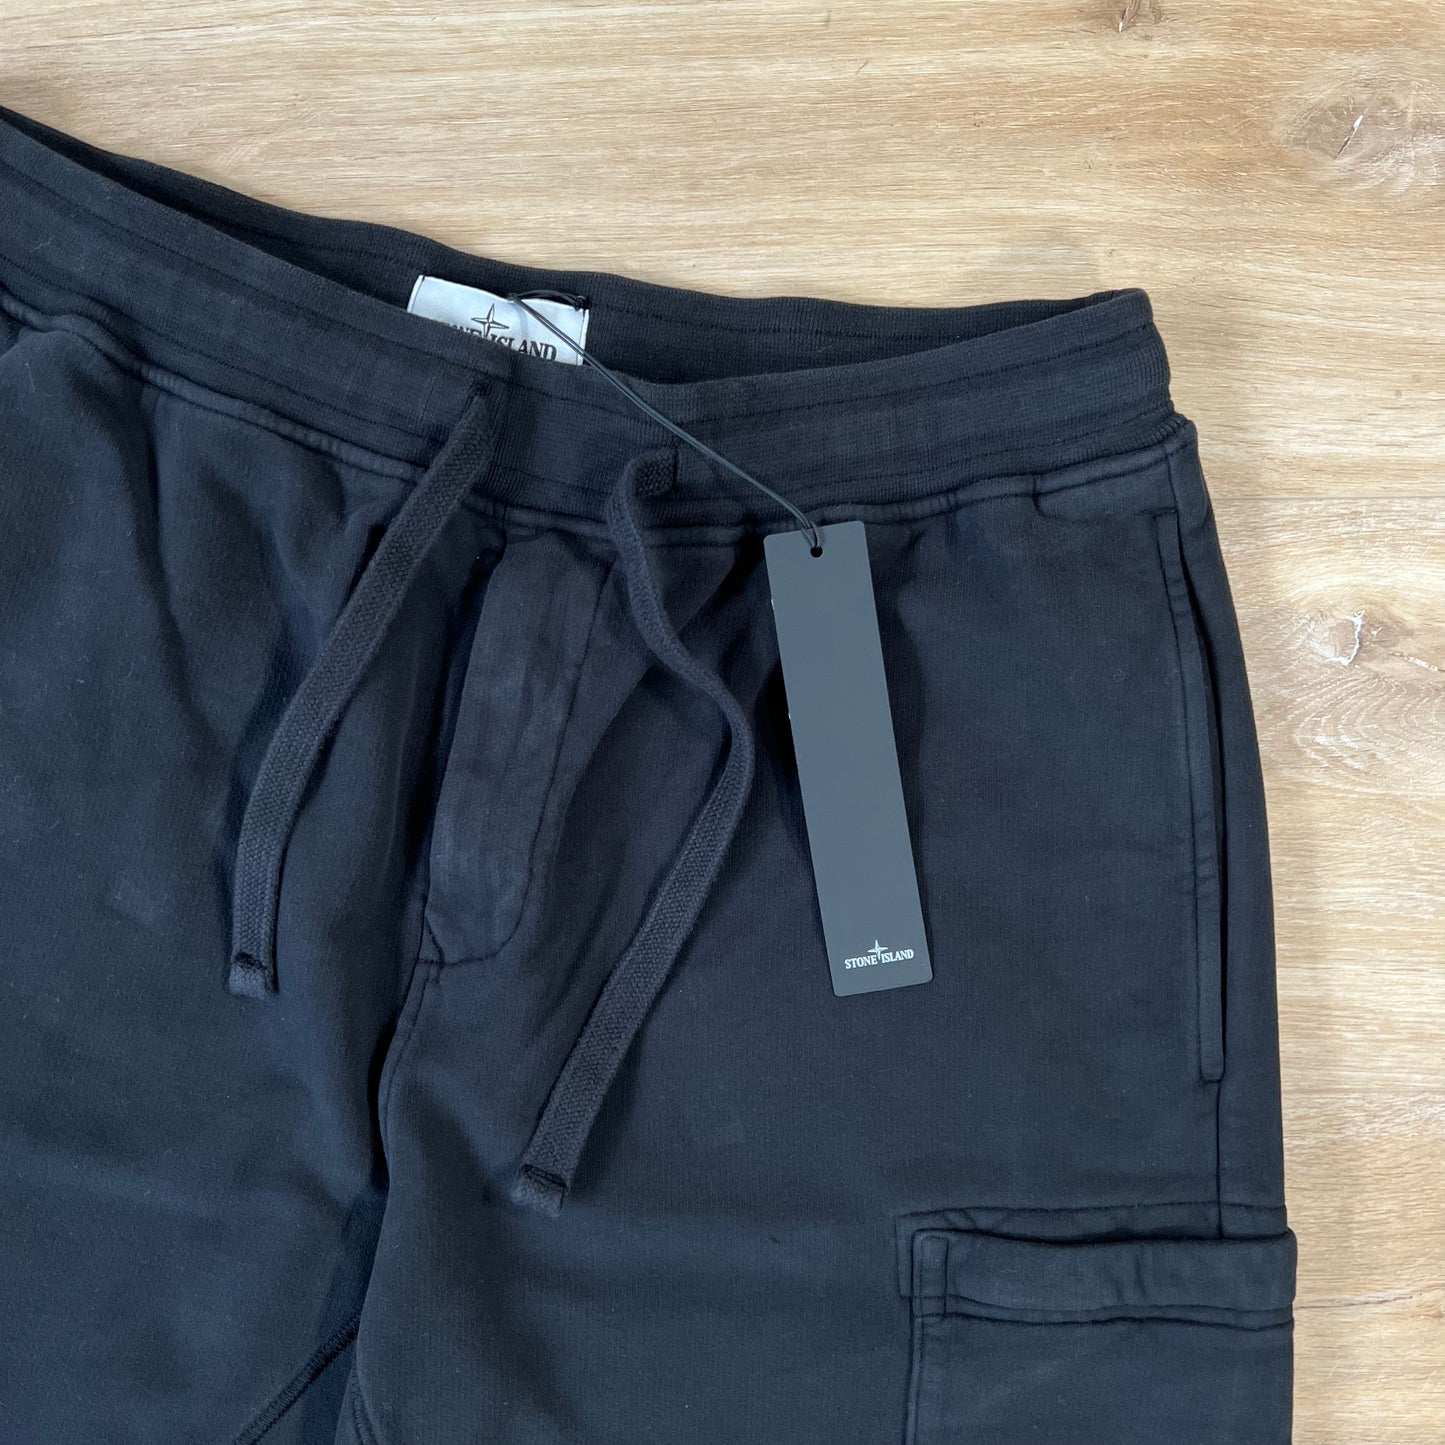 Stone Island Garment Dyed Fleece Shorts in Black